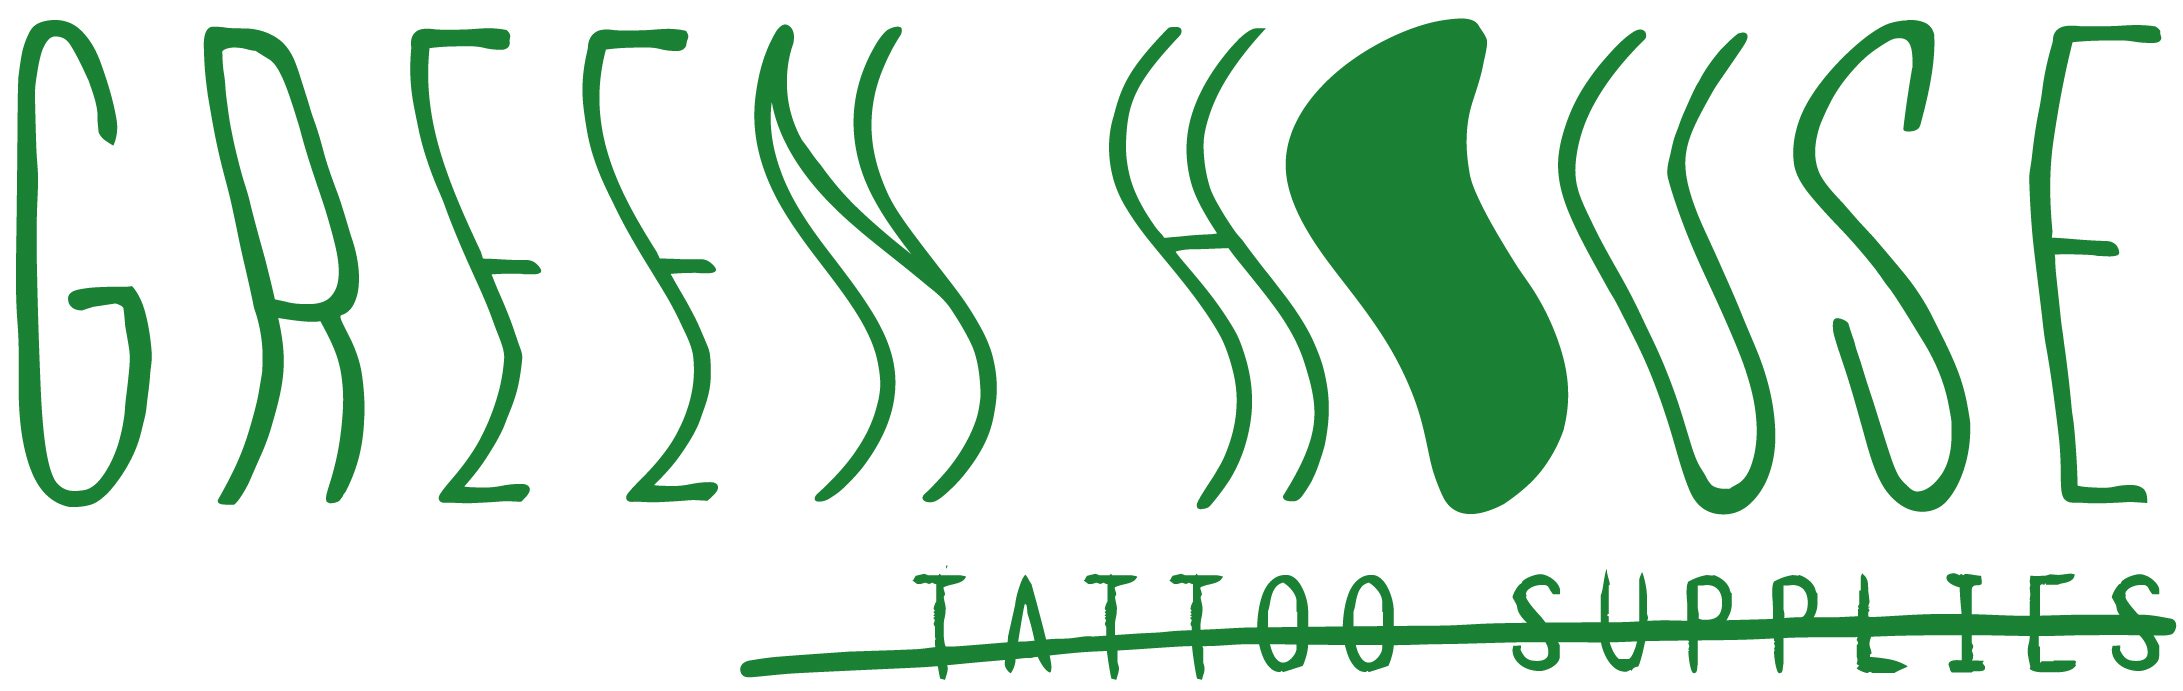 Green House Tattoo Supplies - logo